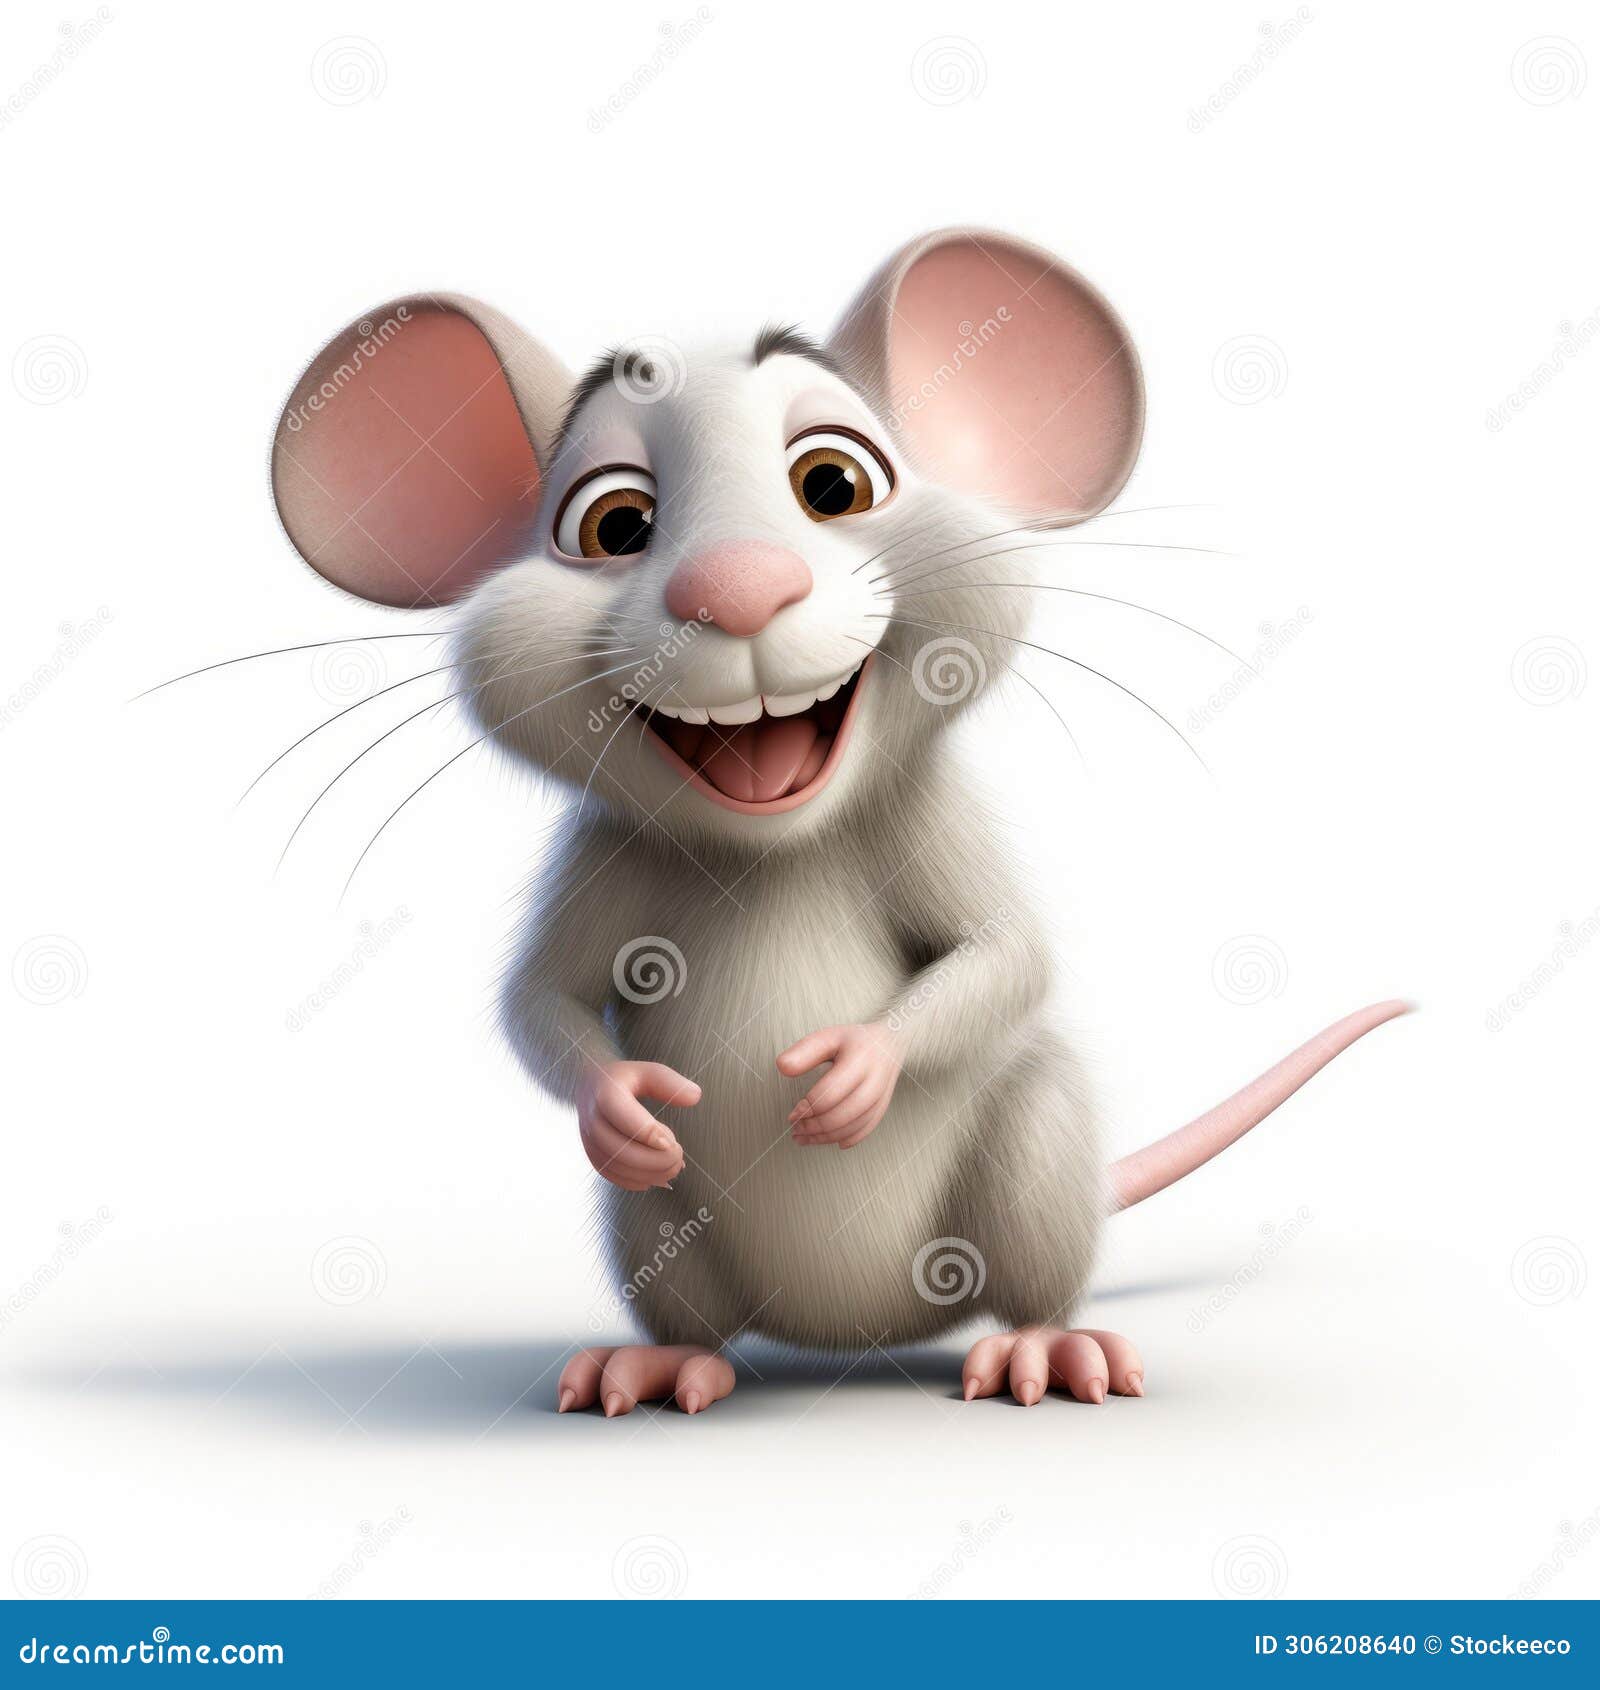 charming cartoon mouse smiling: vicente romero redondo style